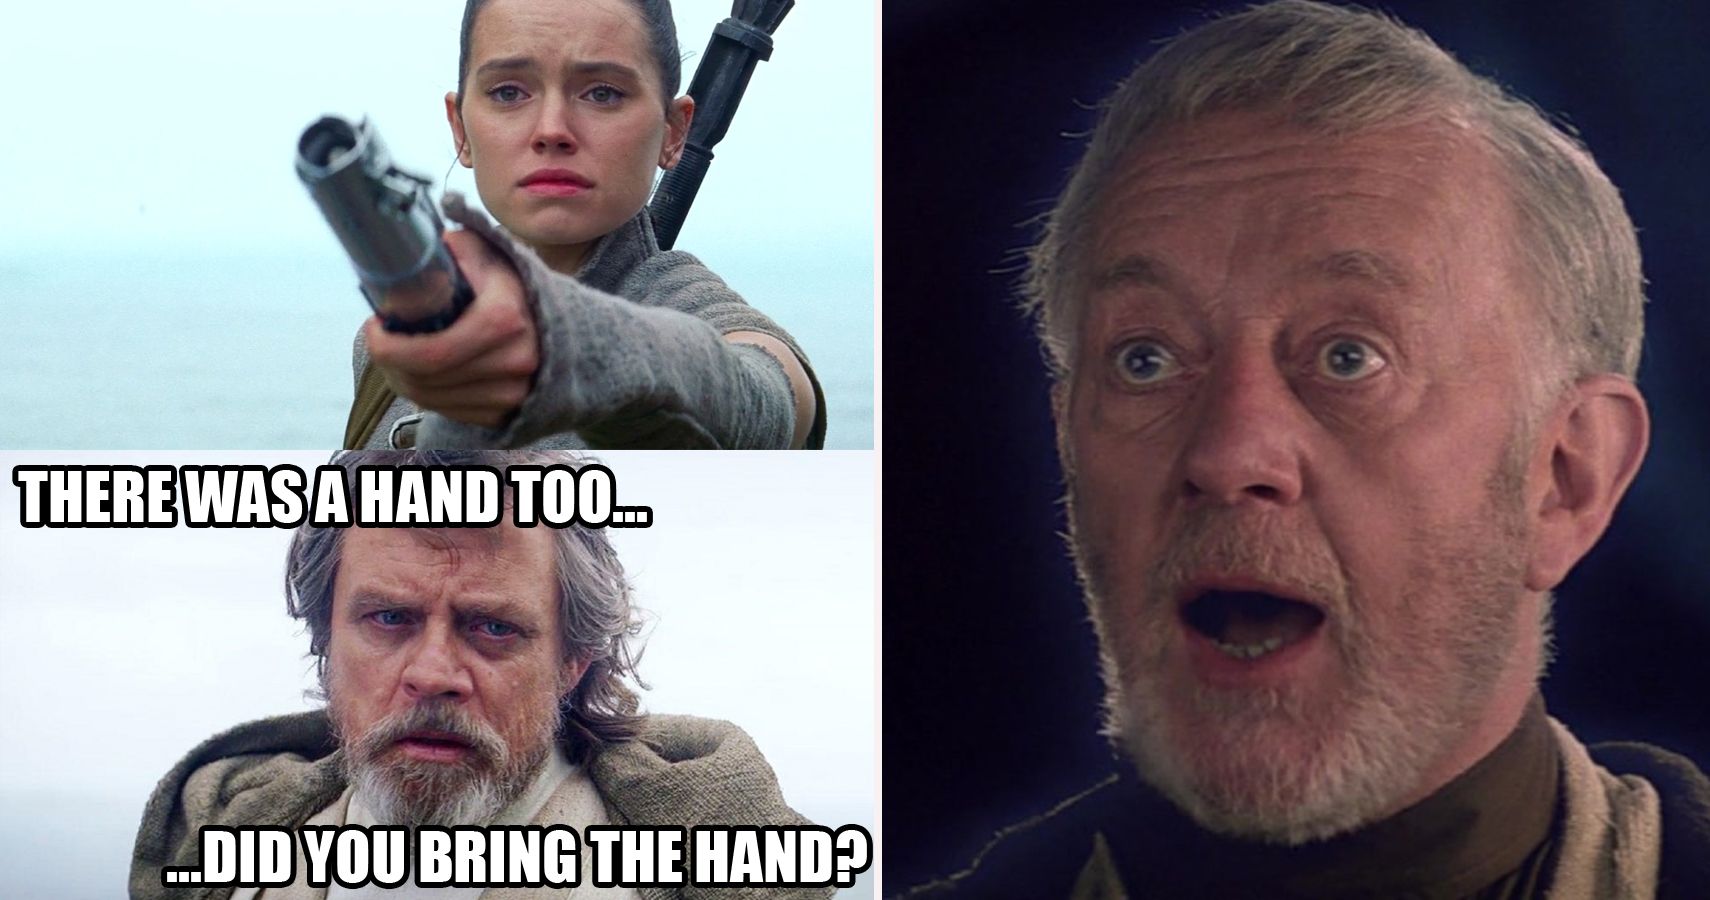 Star Wars Memes That Crossed The Line TheGamer